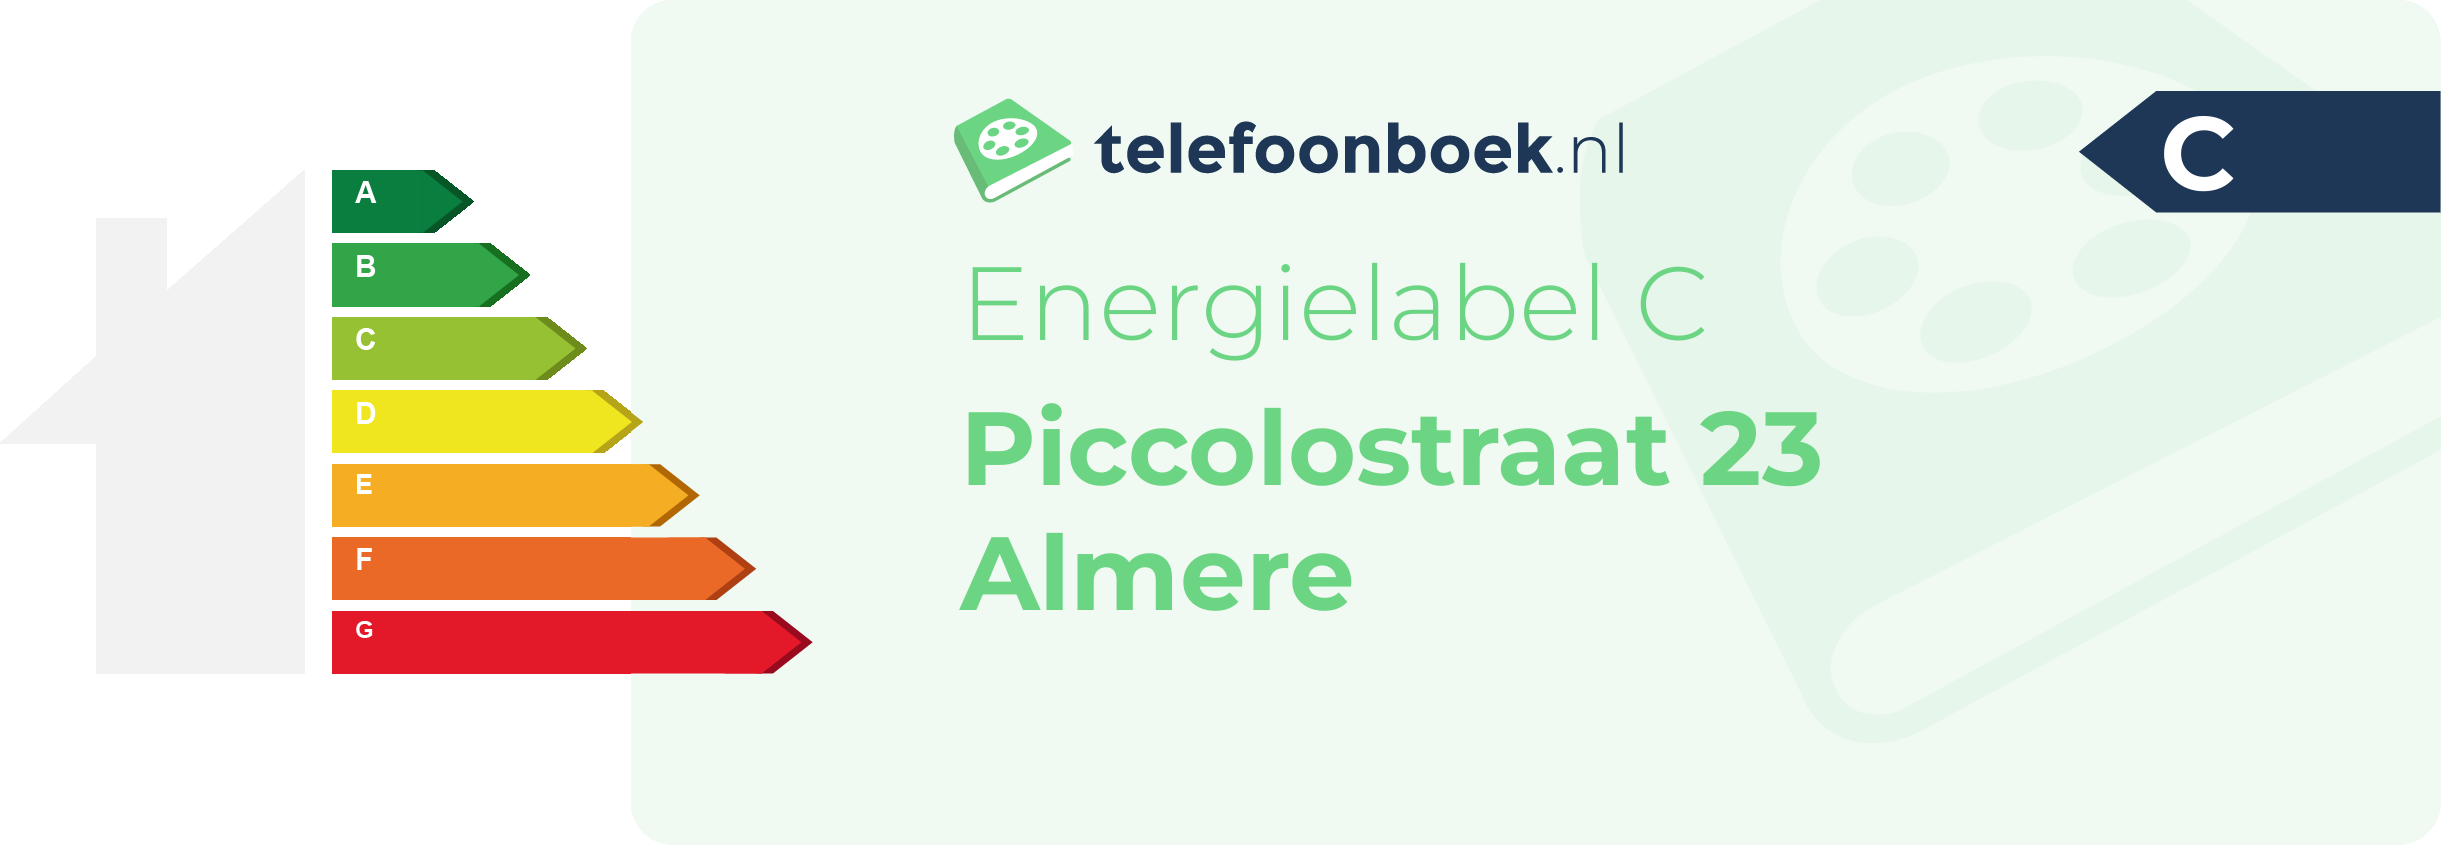 Energielabel Piccolostraat 23 Almere